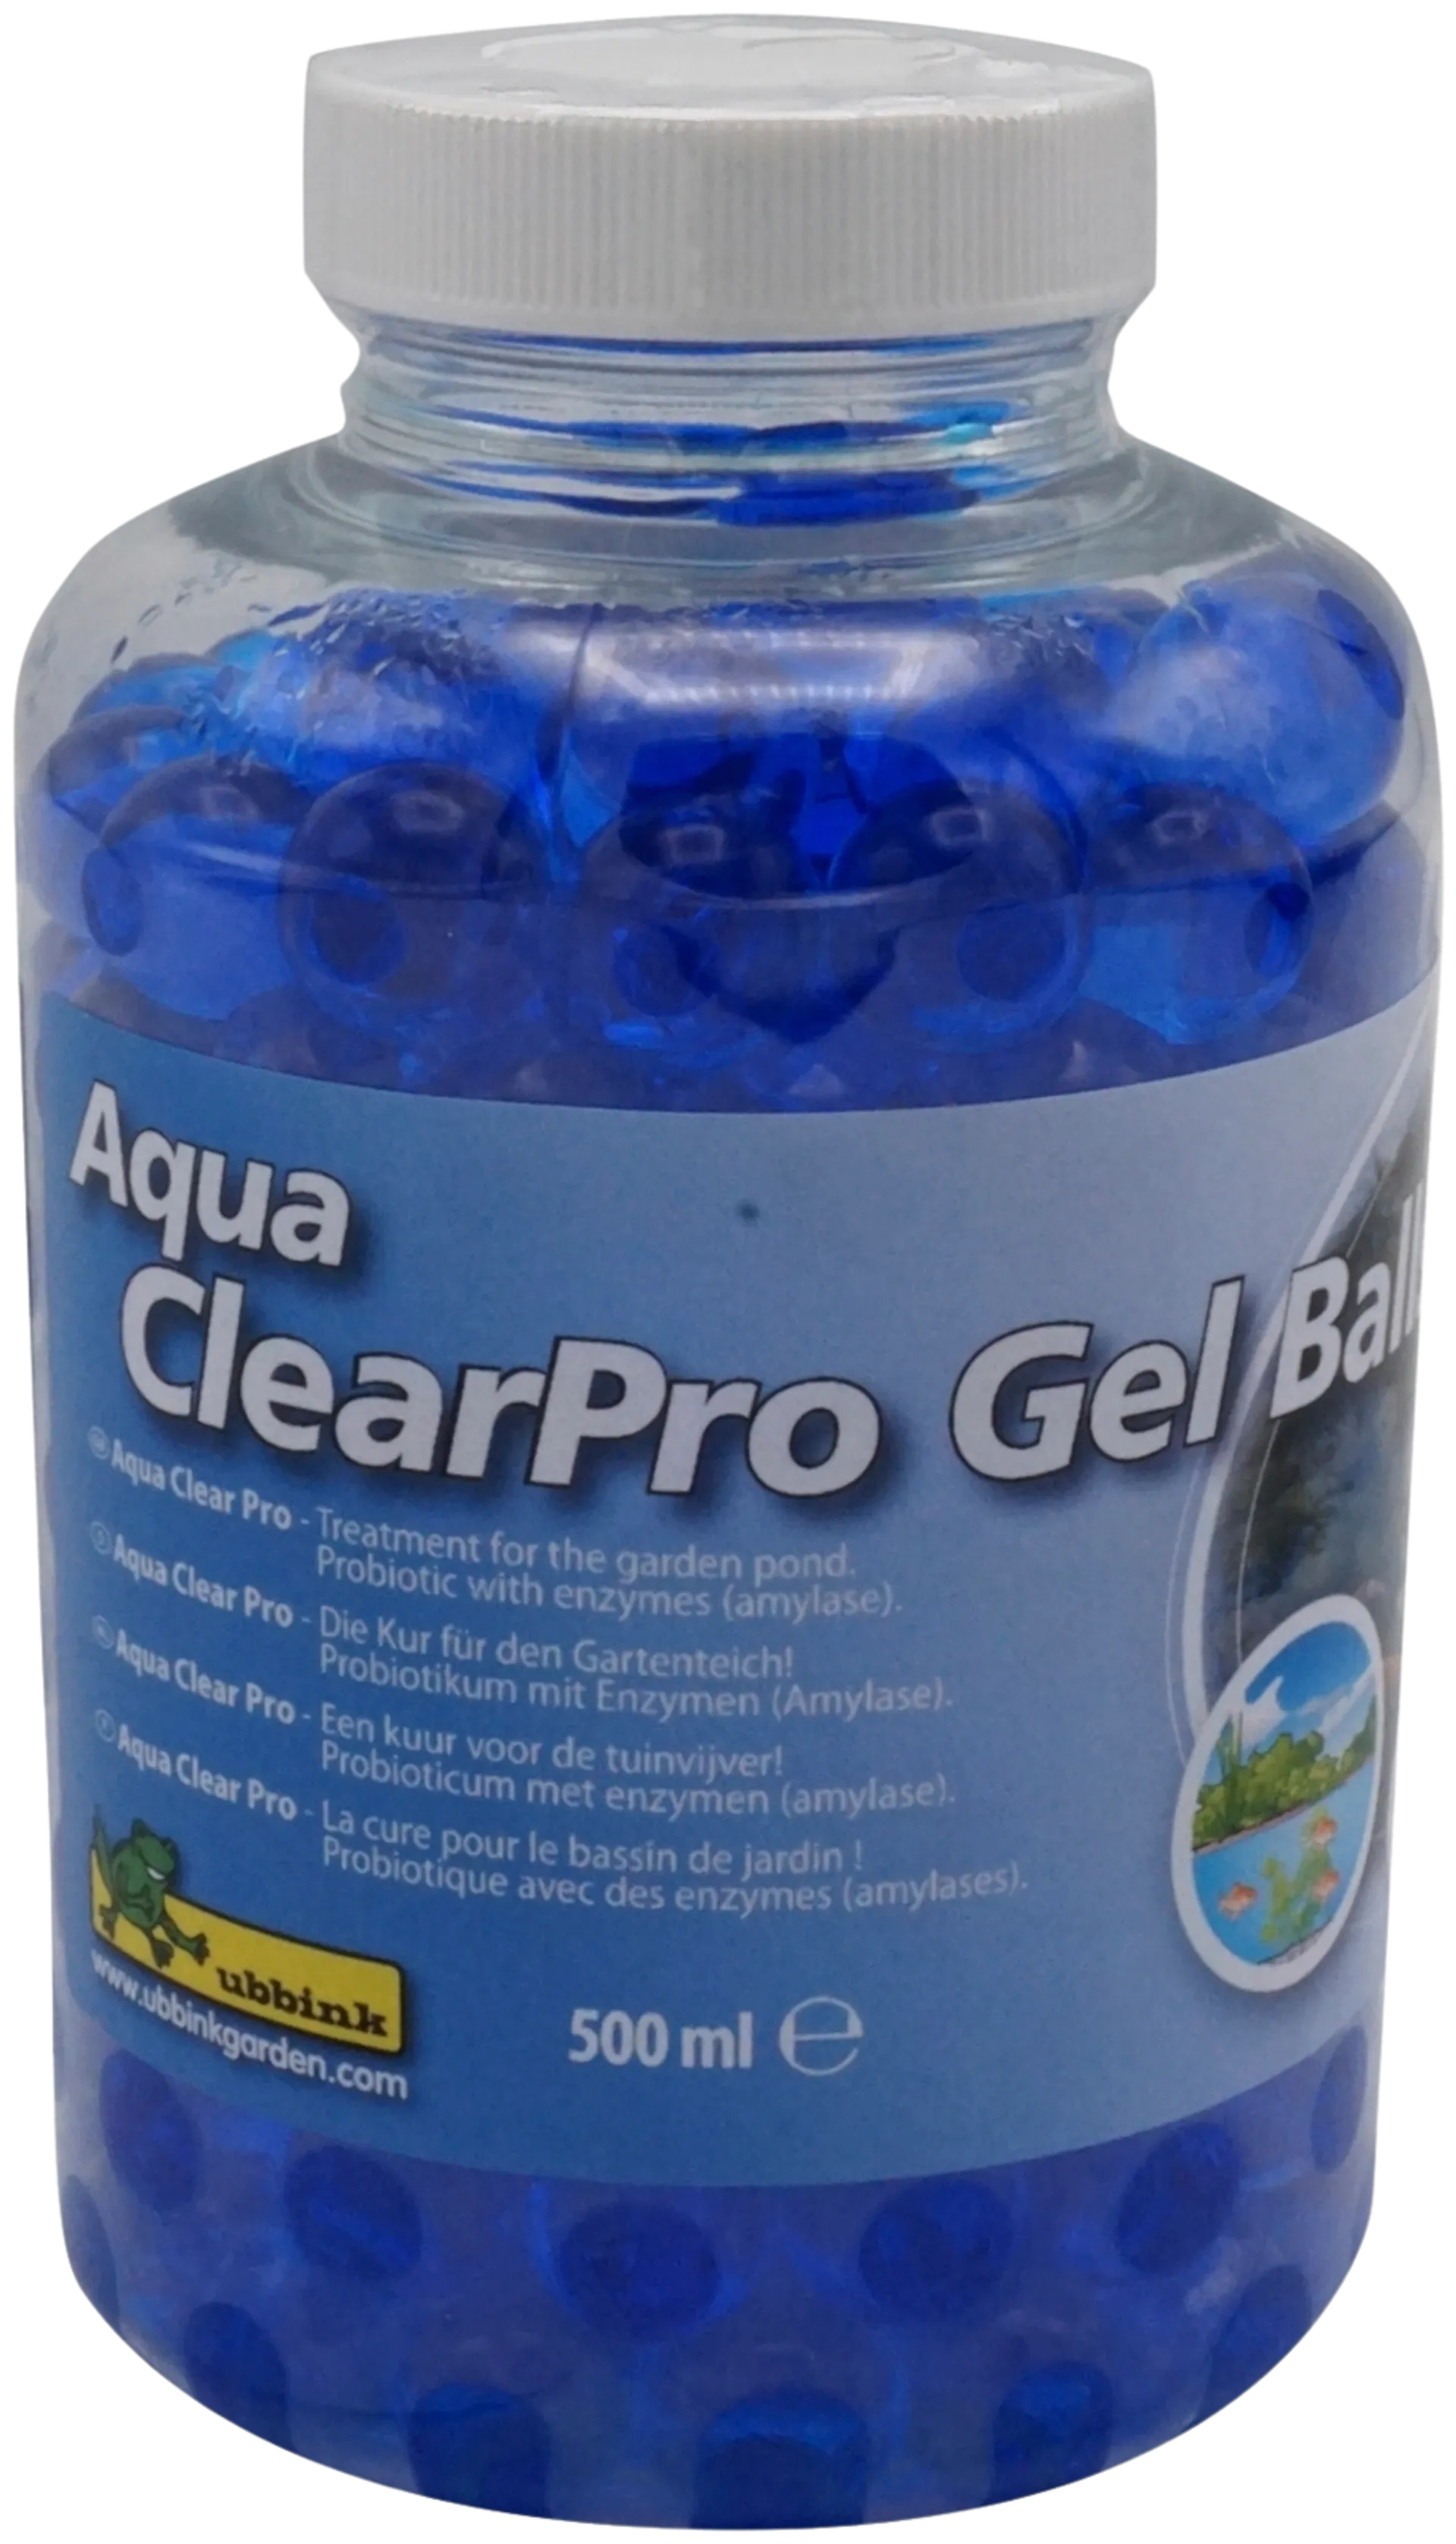 Ubbink Aqua ClearPro geelipallot 500ml - 1